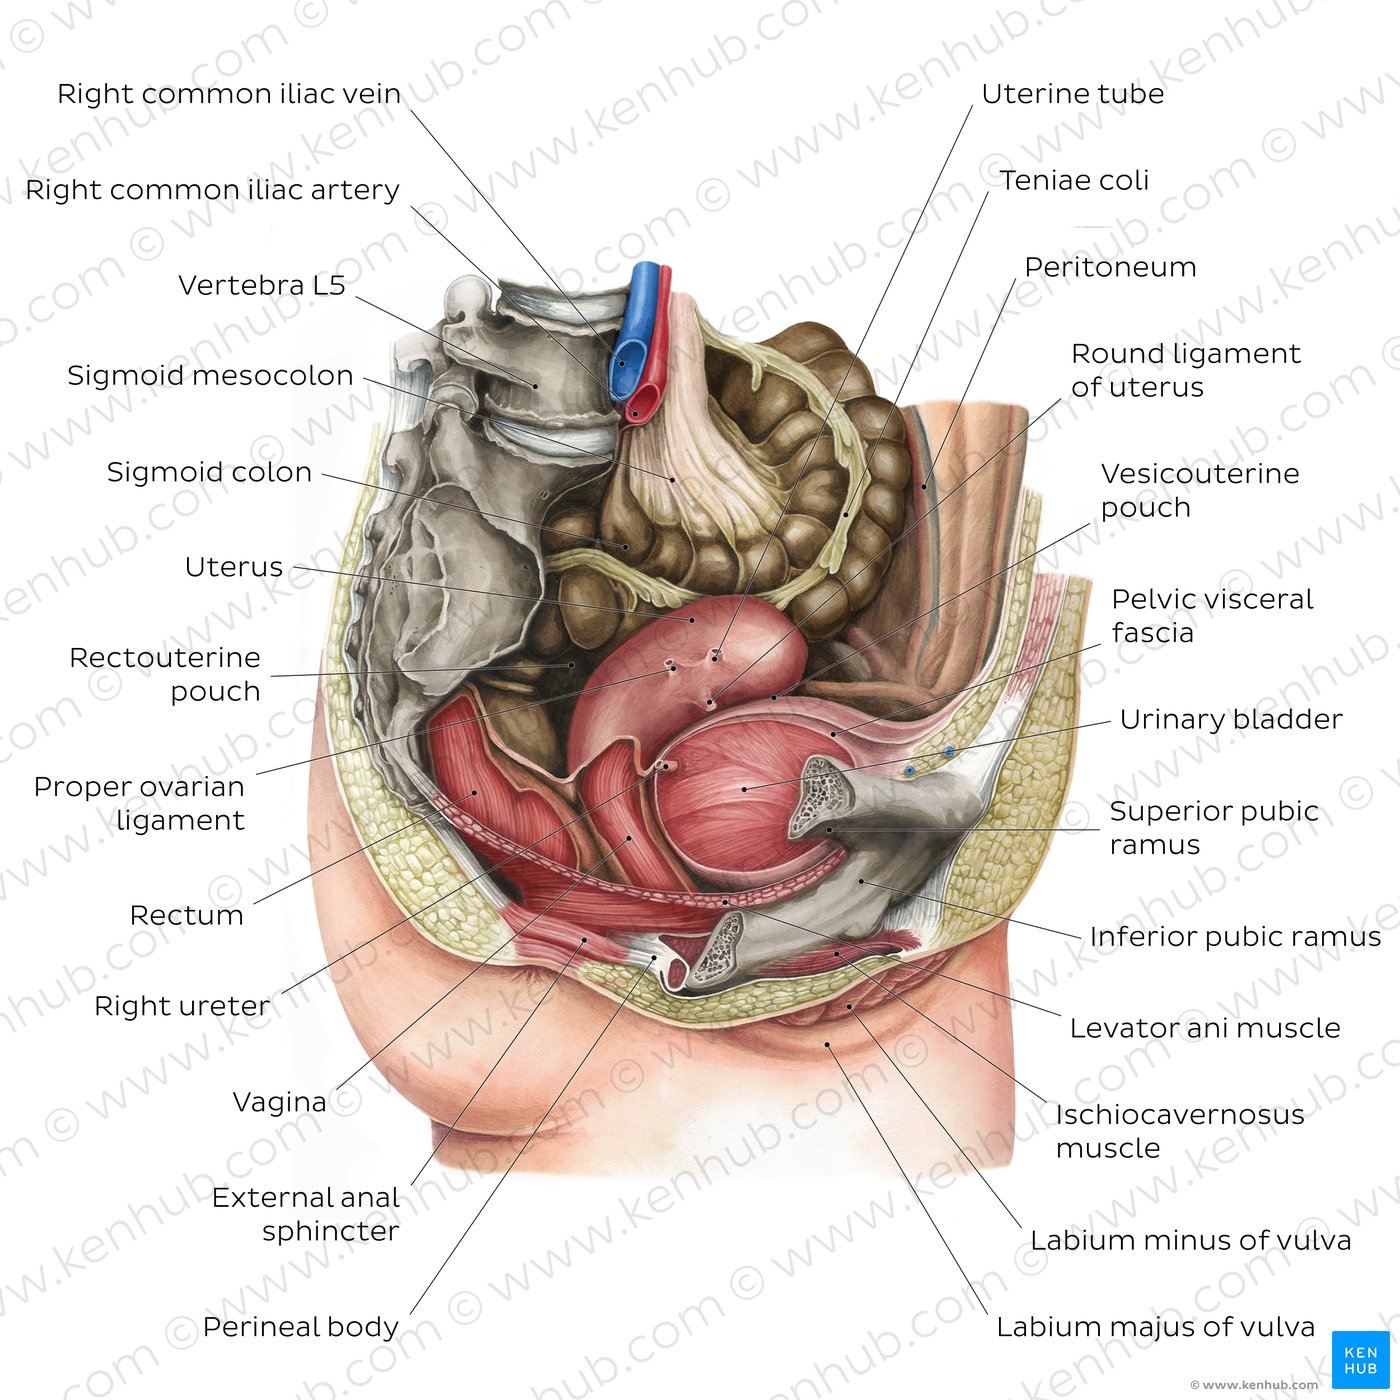 Pelvis and Perineum: Anatomy, vessels, nerves